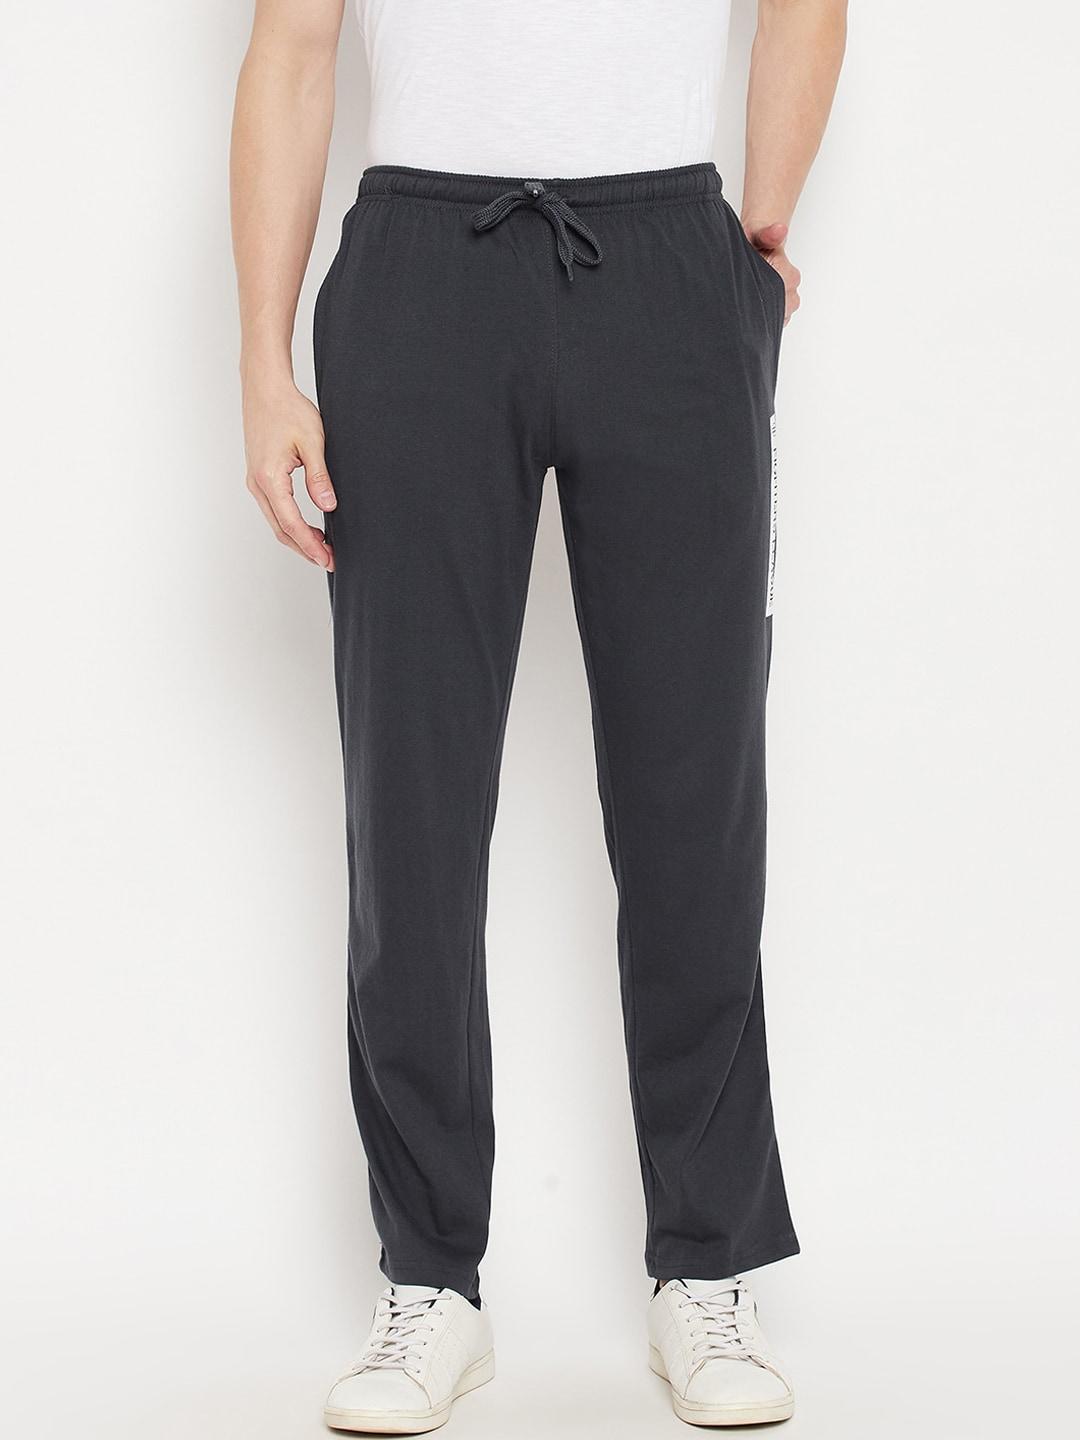 duke-men-grey-solid-cotton-track-pants